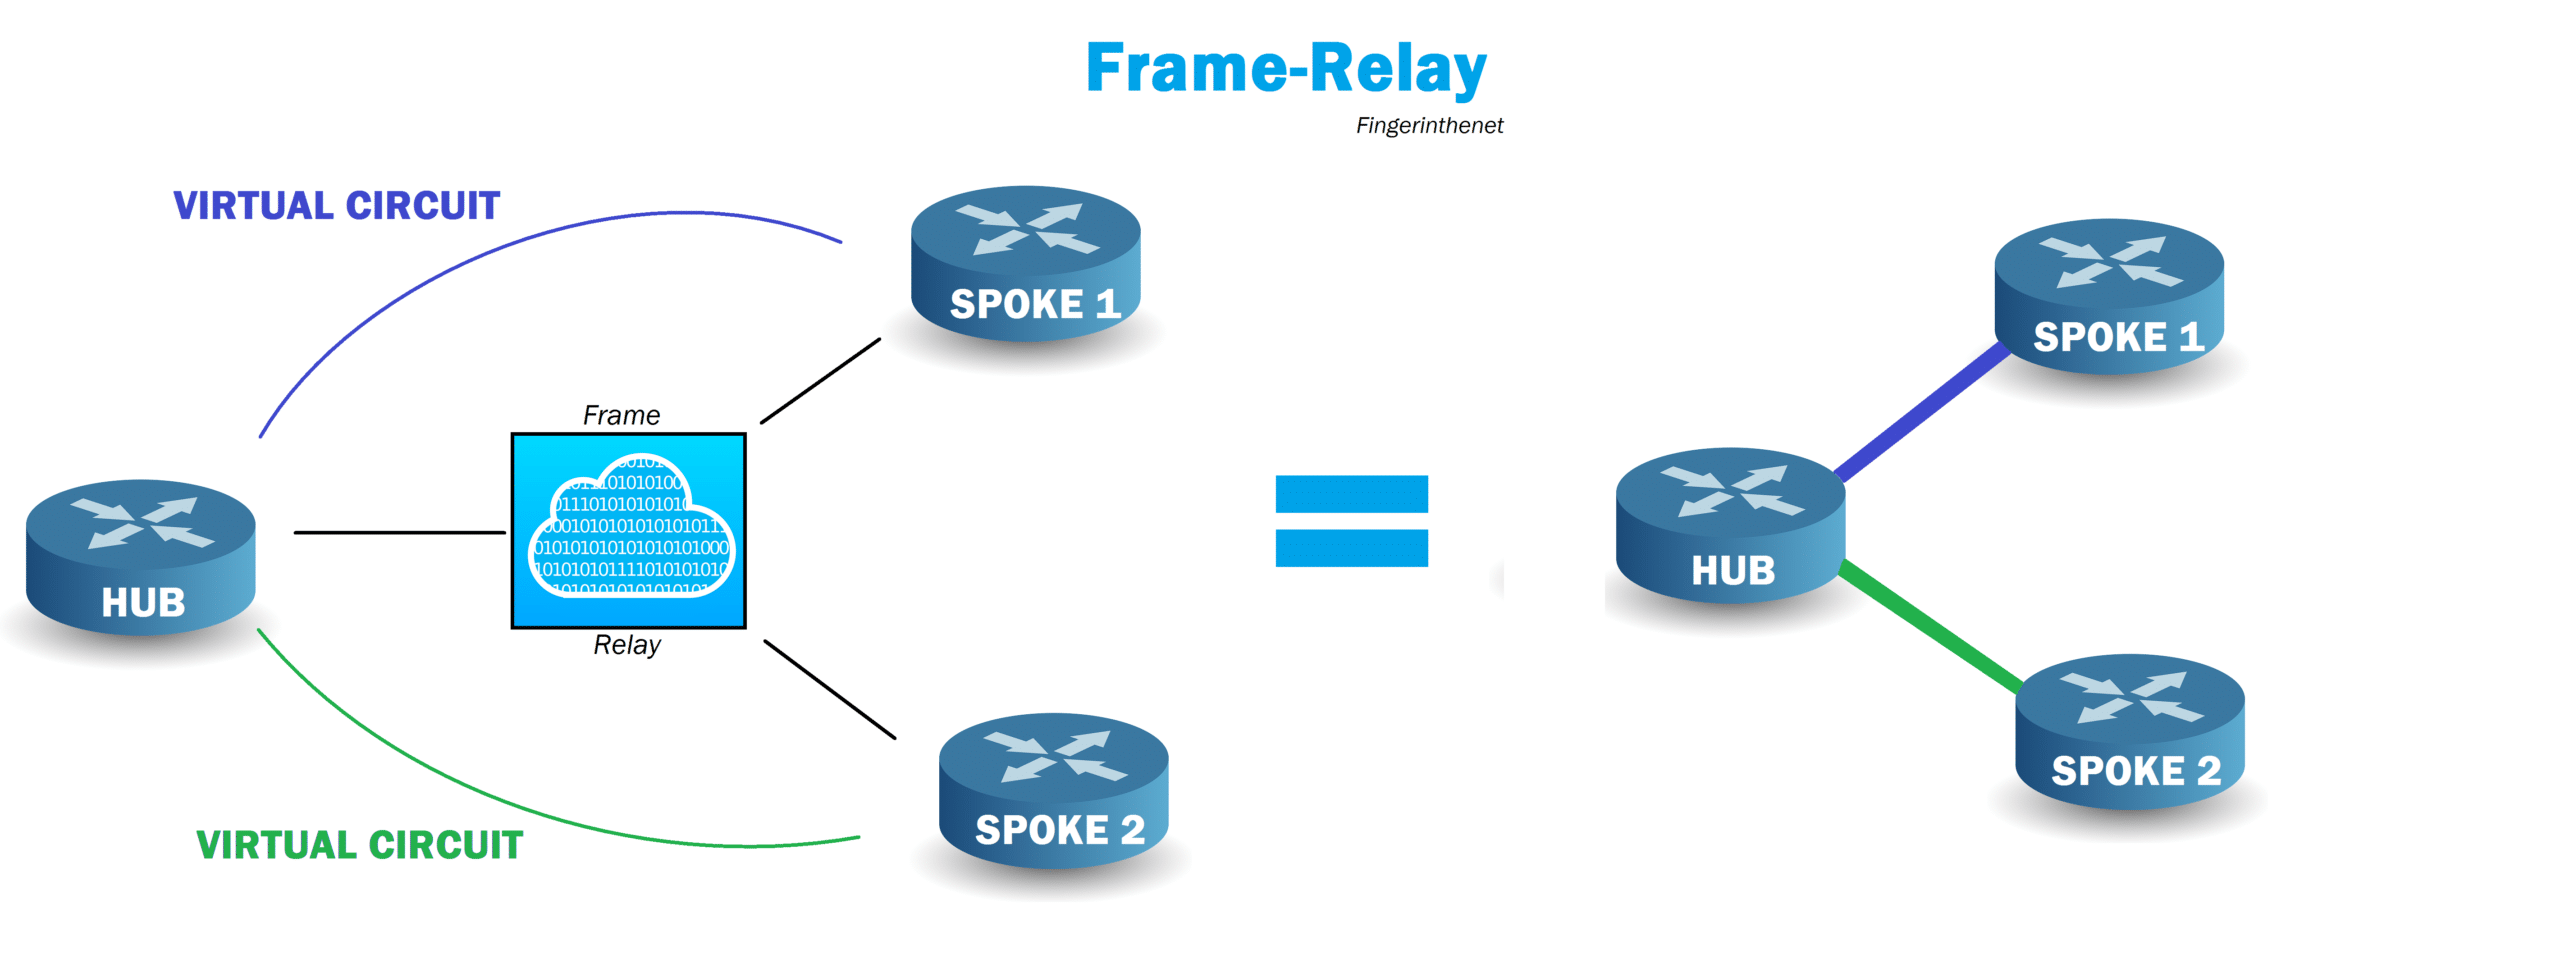 Frame-Relay Virtual Circuit